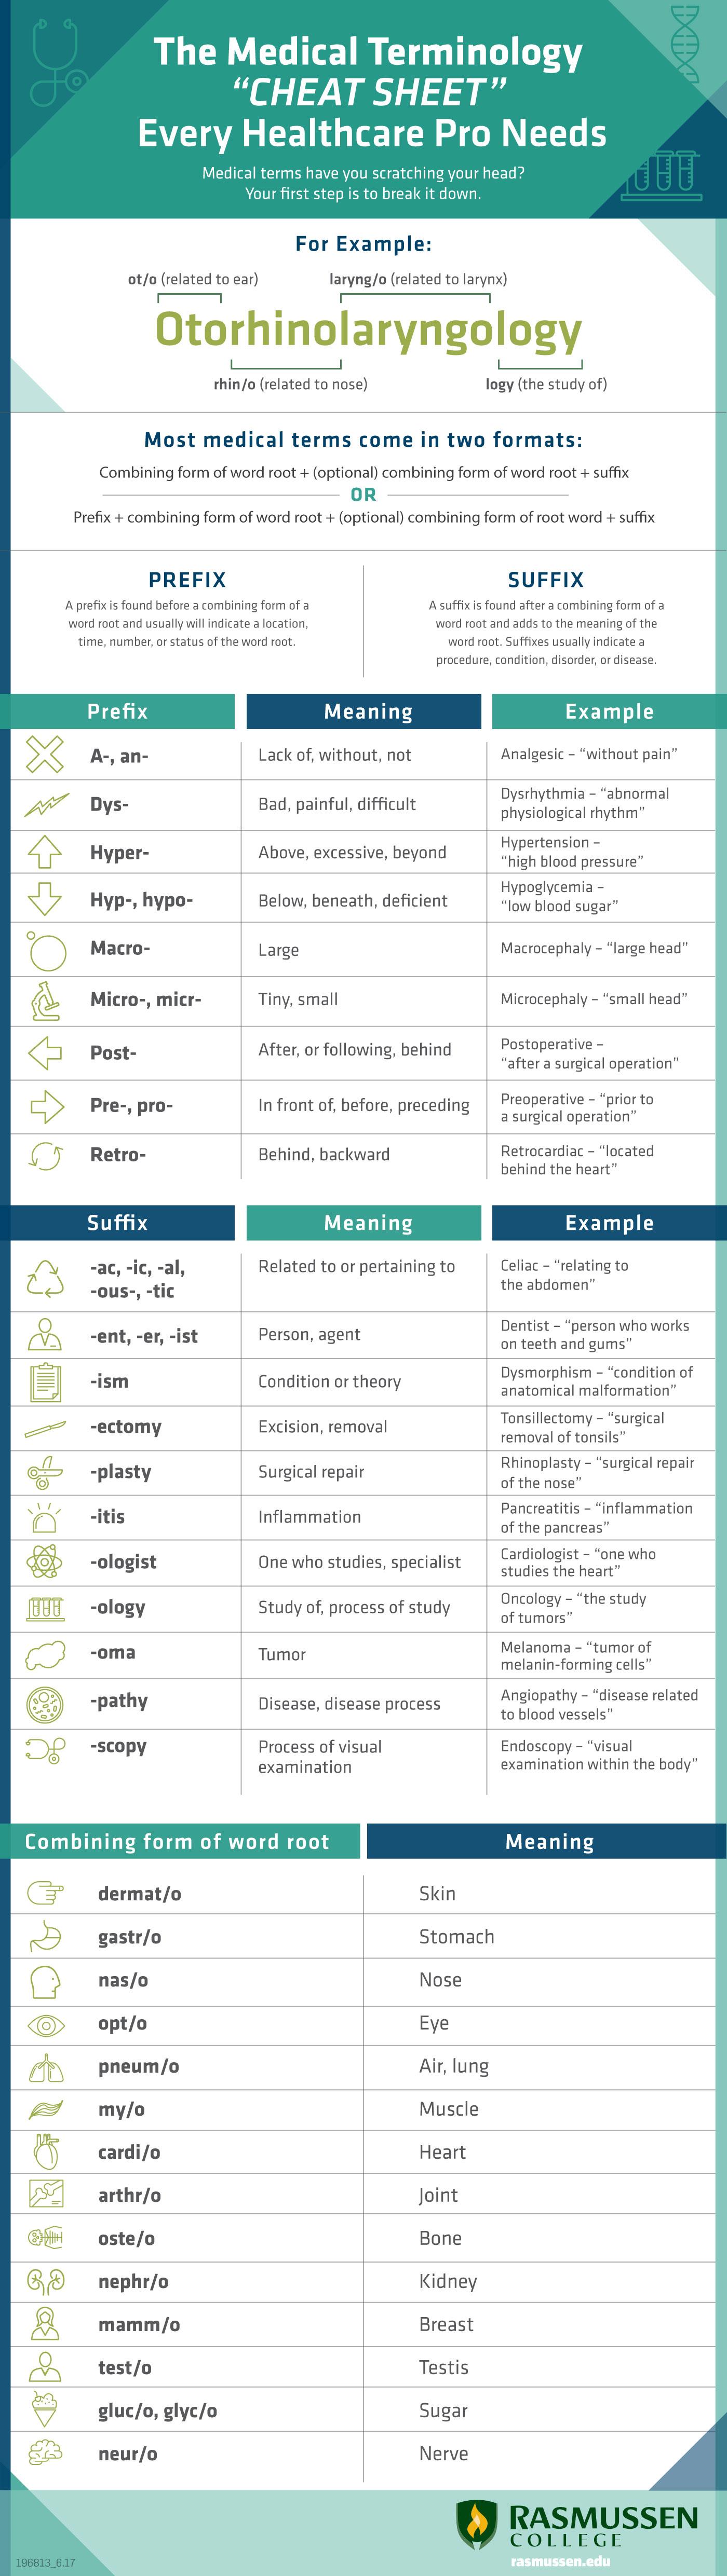 Medical Terminology Infographic, described in detail below.